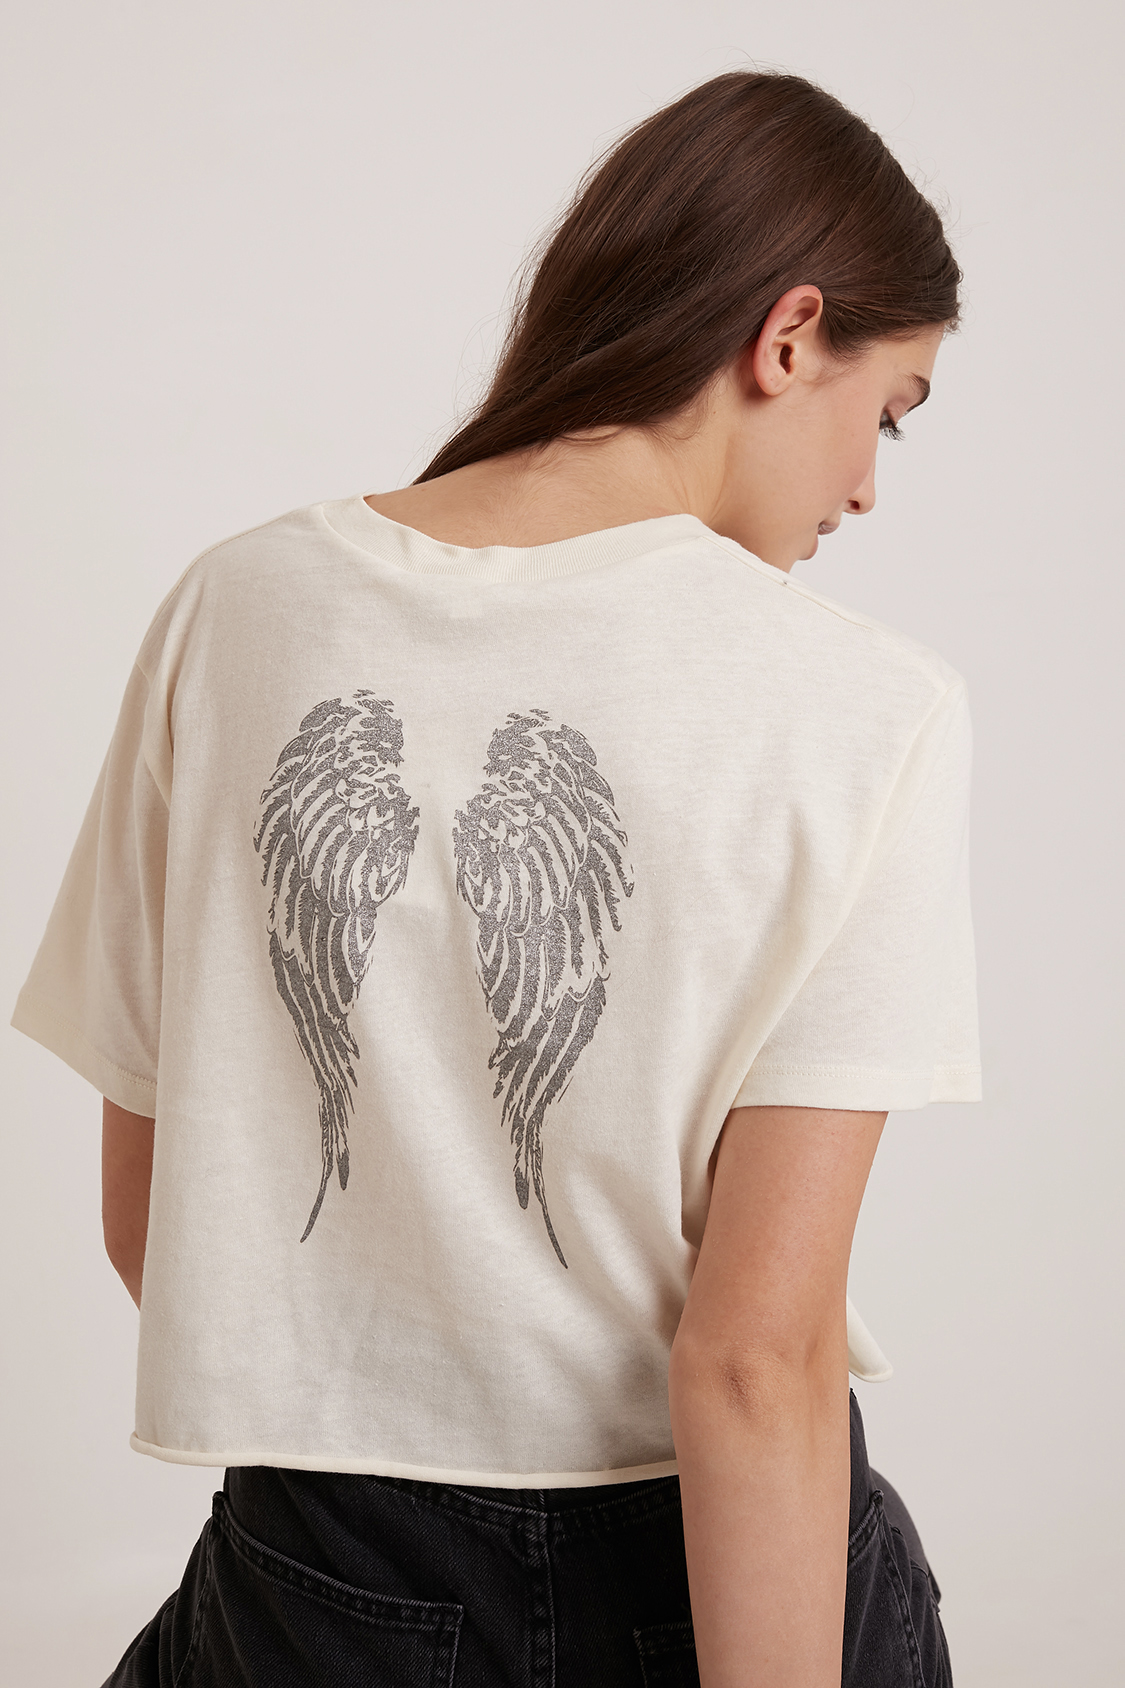 Angel T-shirt